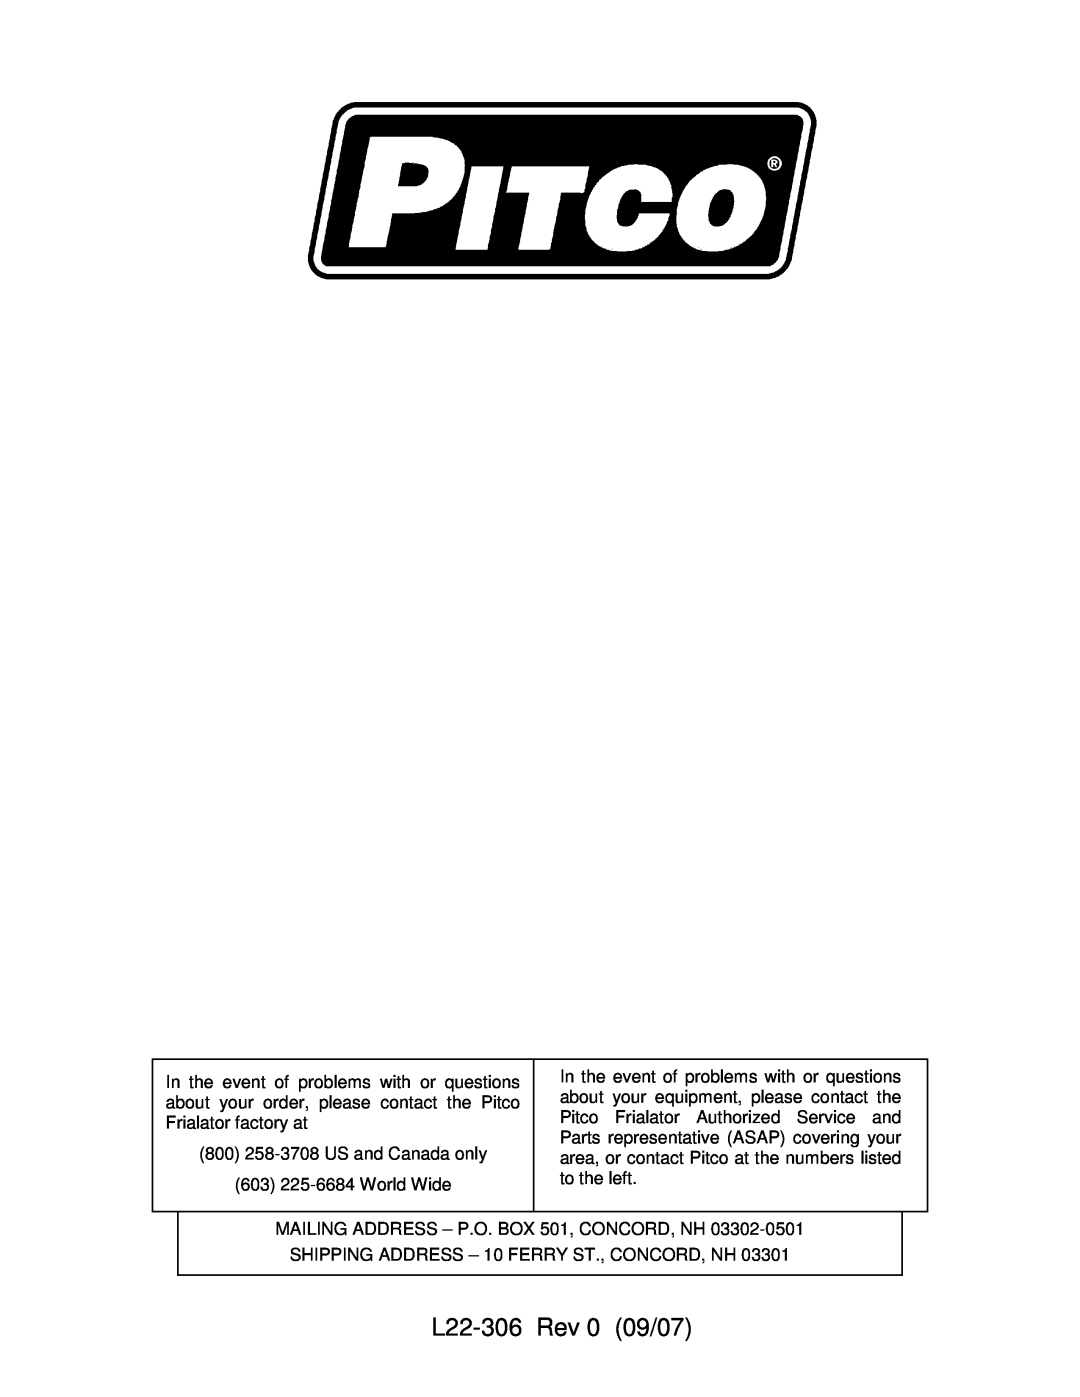 Pitco Frialator service manual L22-306Rev 0 09/07 